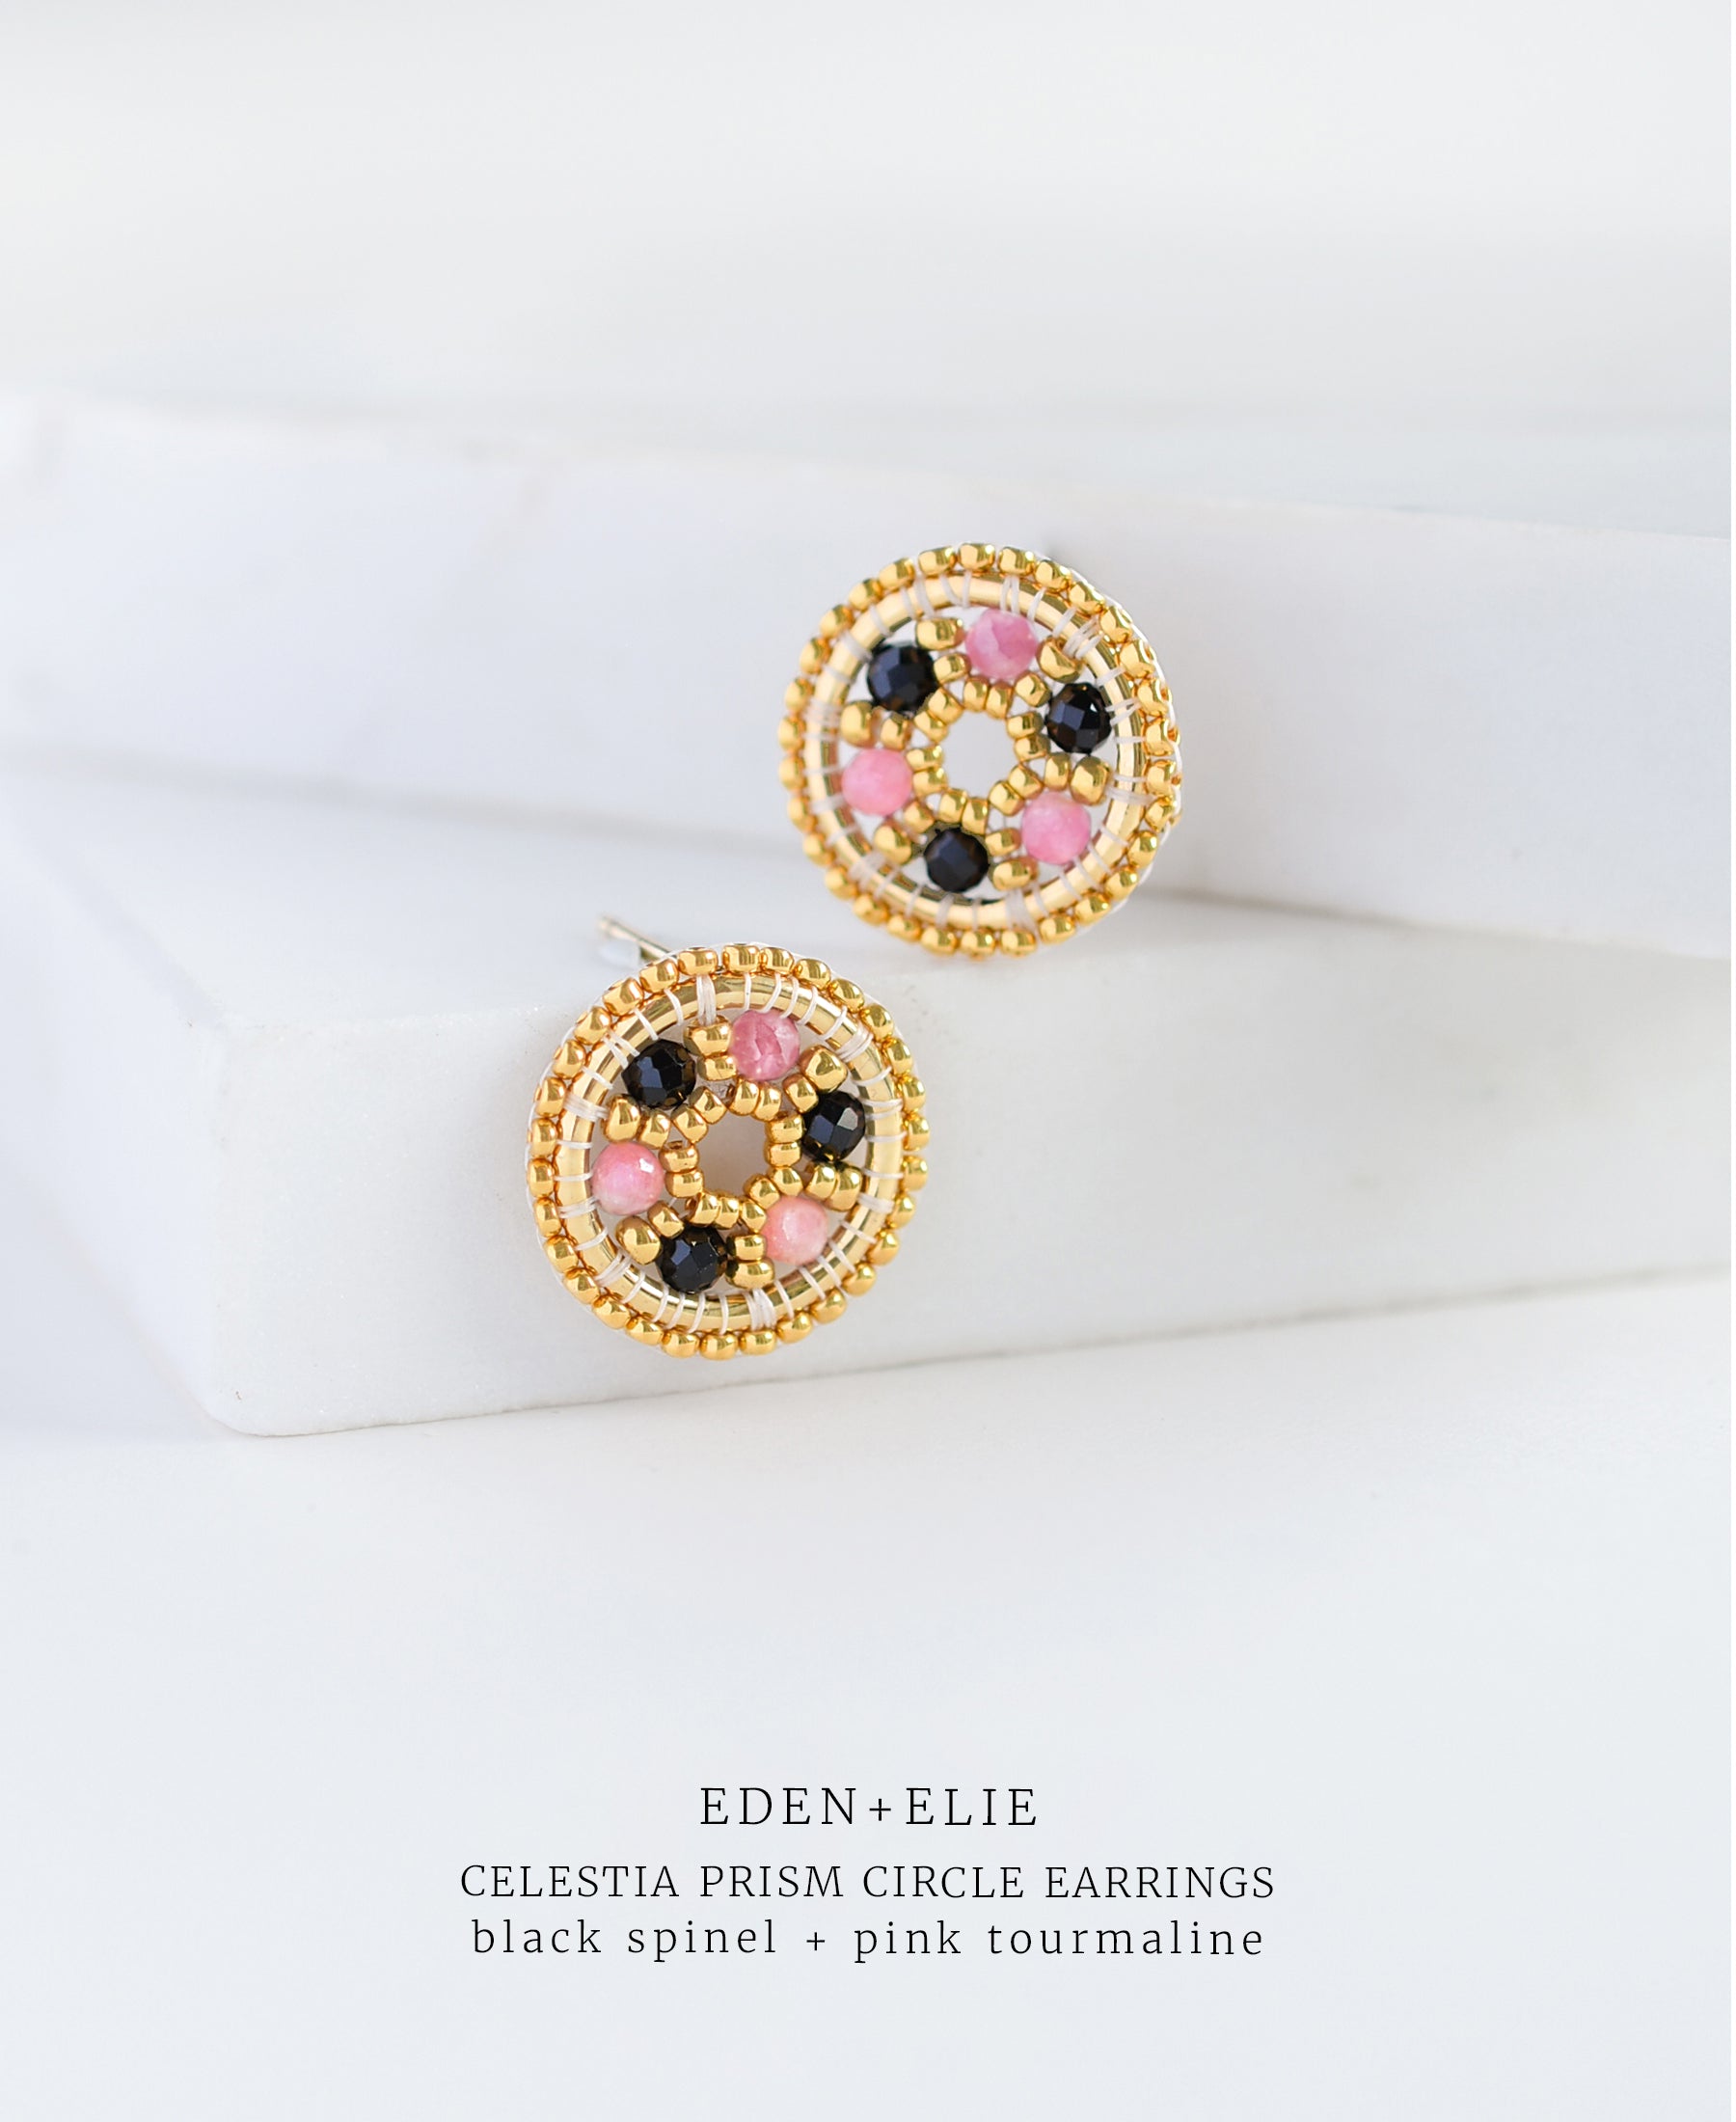 EDEN + ELIE Celestia Prism Circle Earrings - Black Spinel + Pink Tourmaline